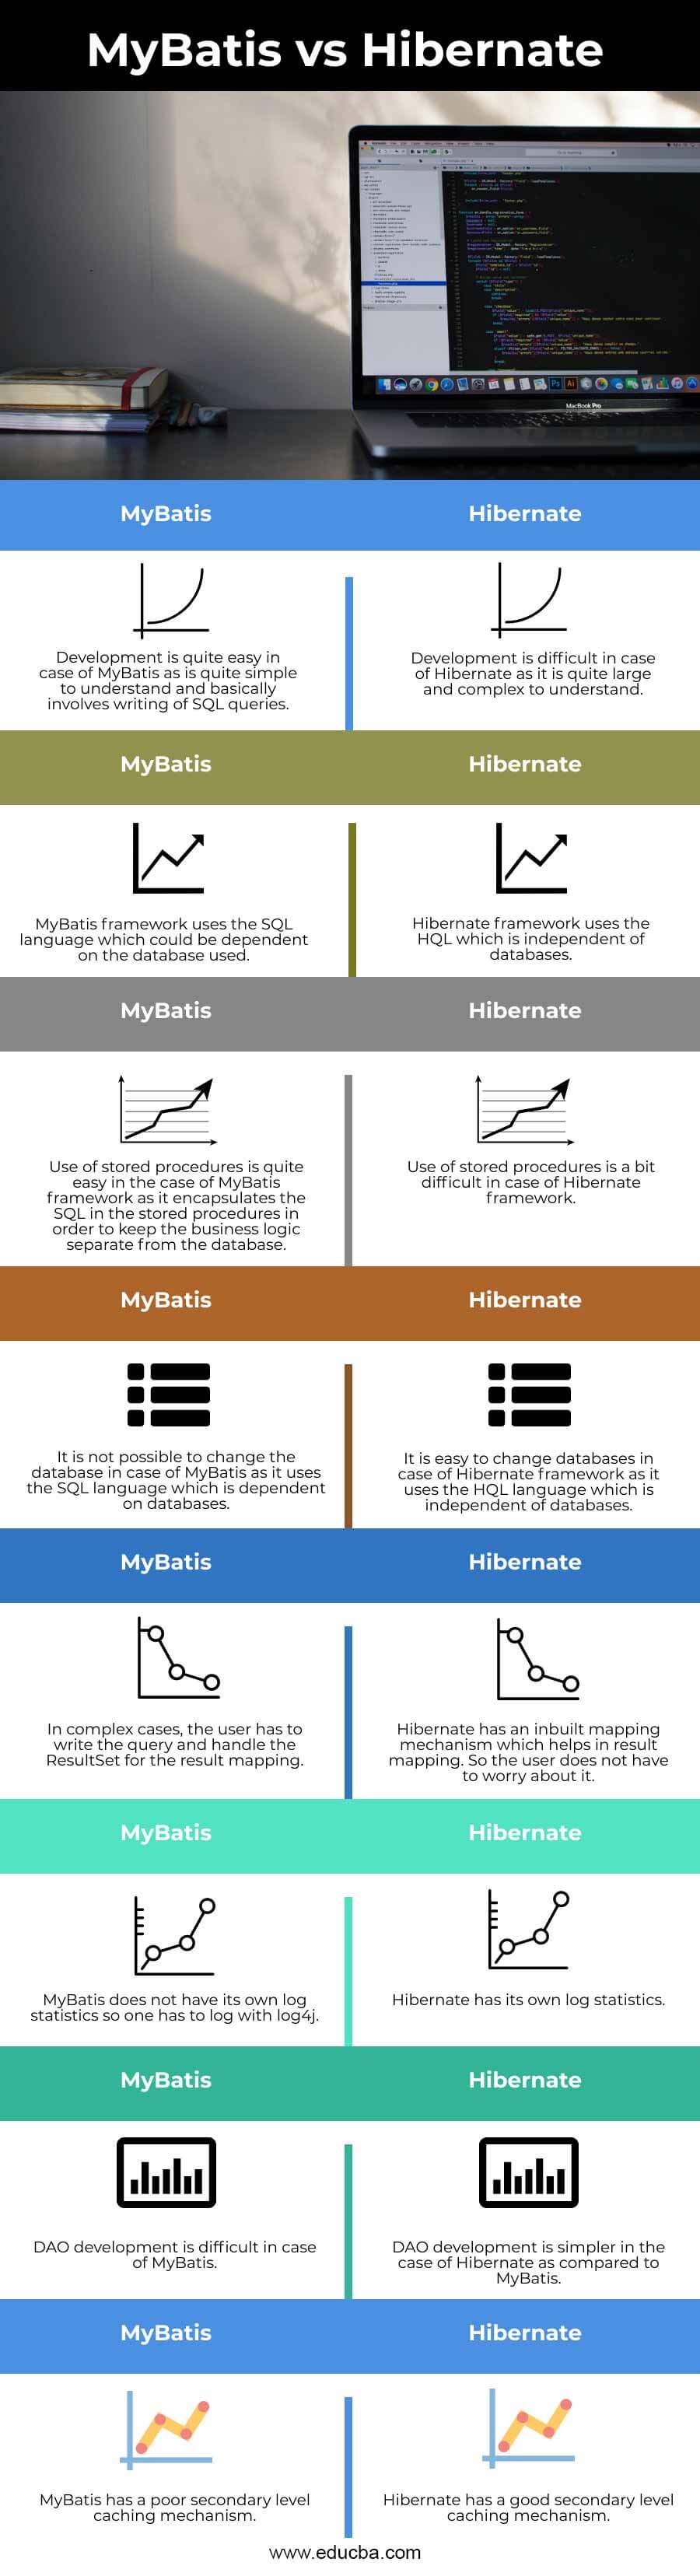 MyBatis-vs-Hibernate-info